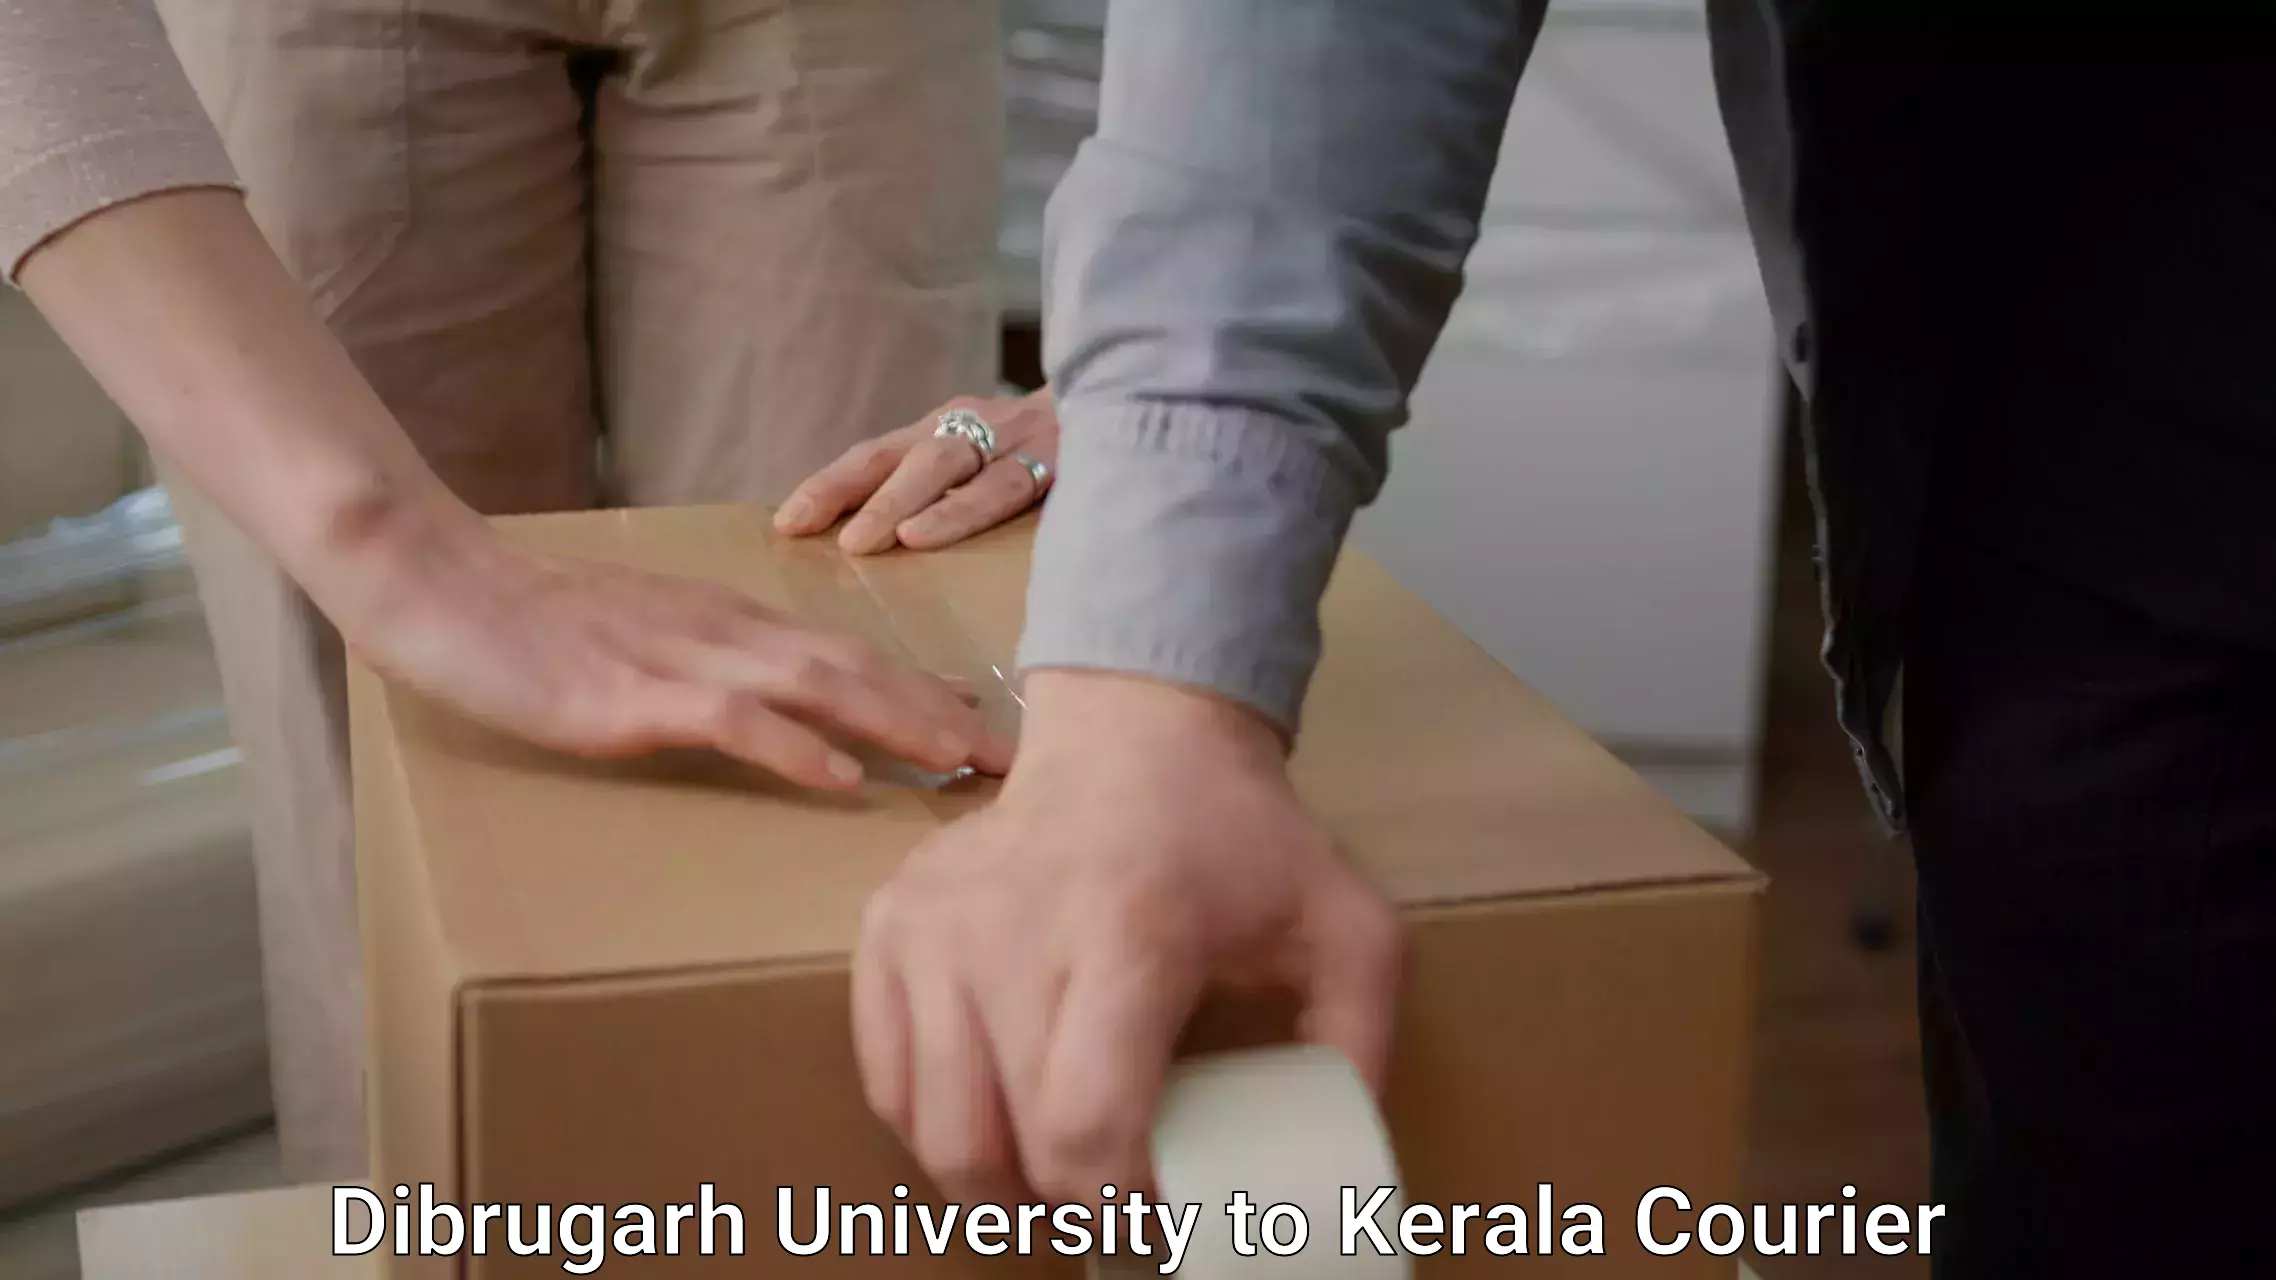 Trusted moving company Dibrugarh University to Alathur Malabar